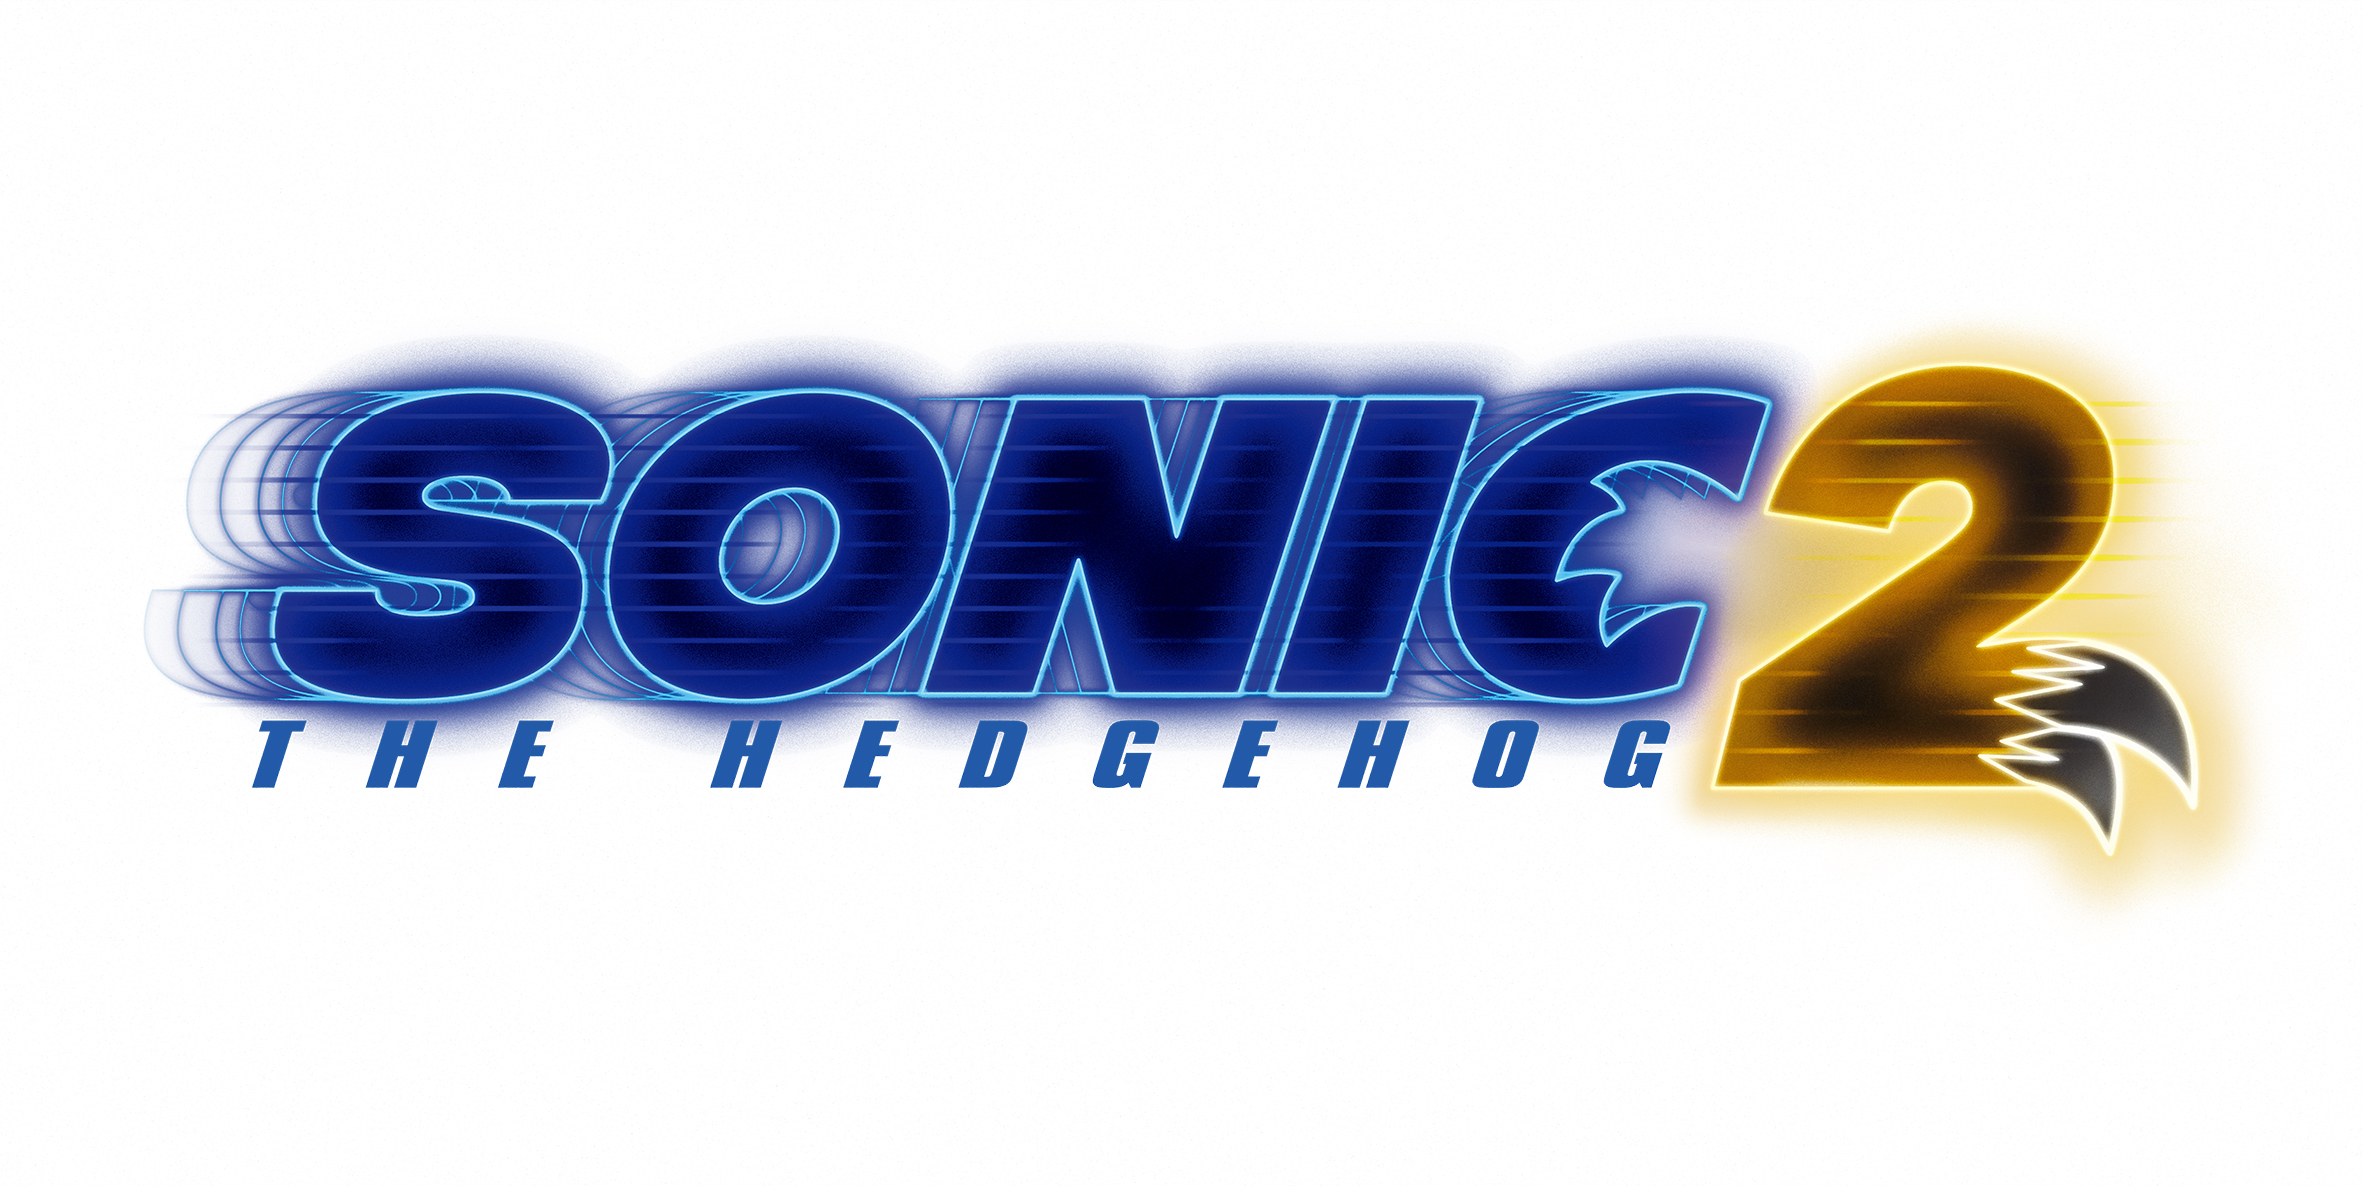 Jakks Pacific Sonic the Hedgehog 2 Movie Figure Collection, 5